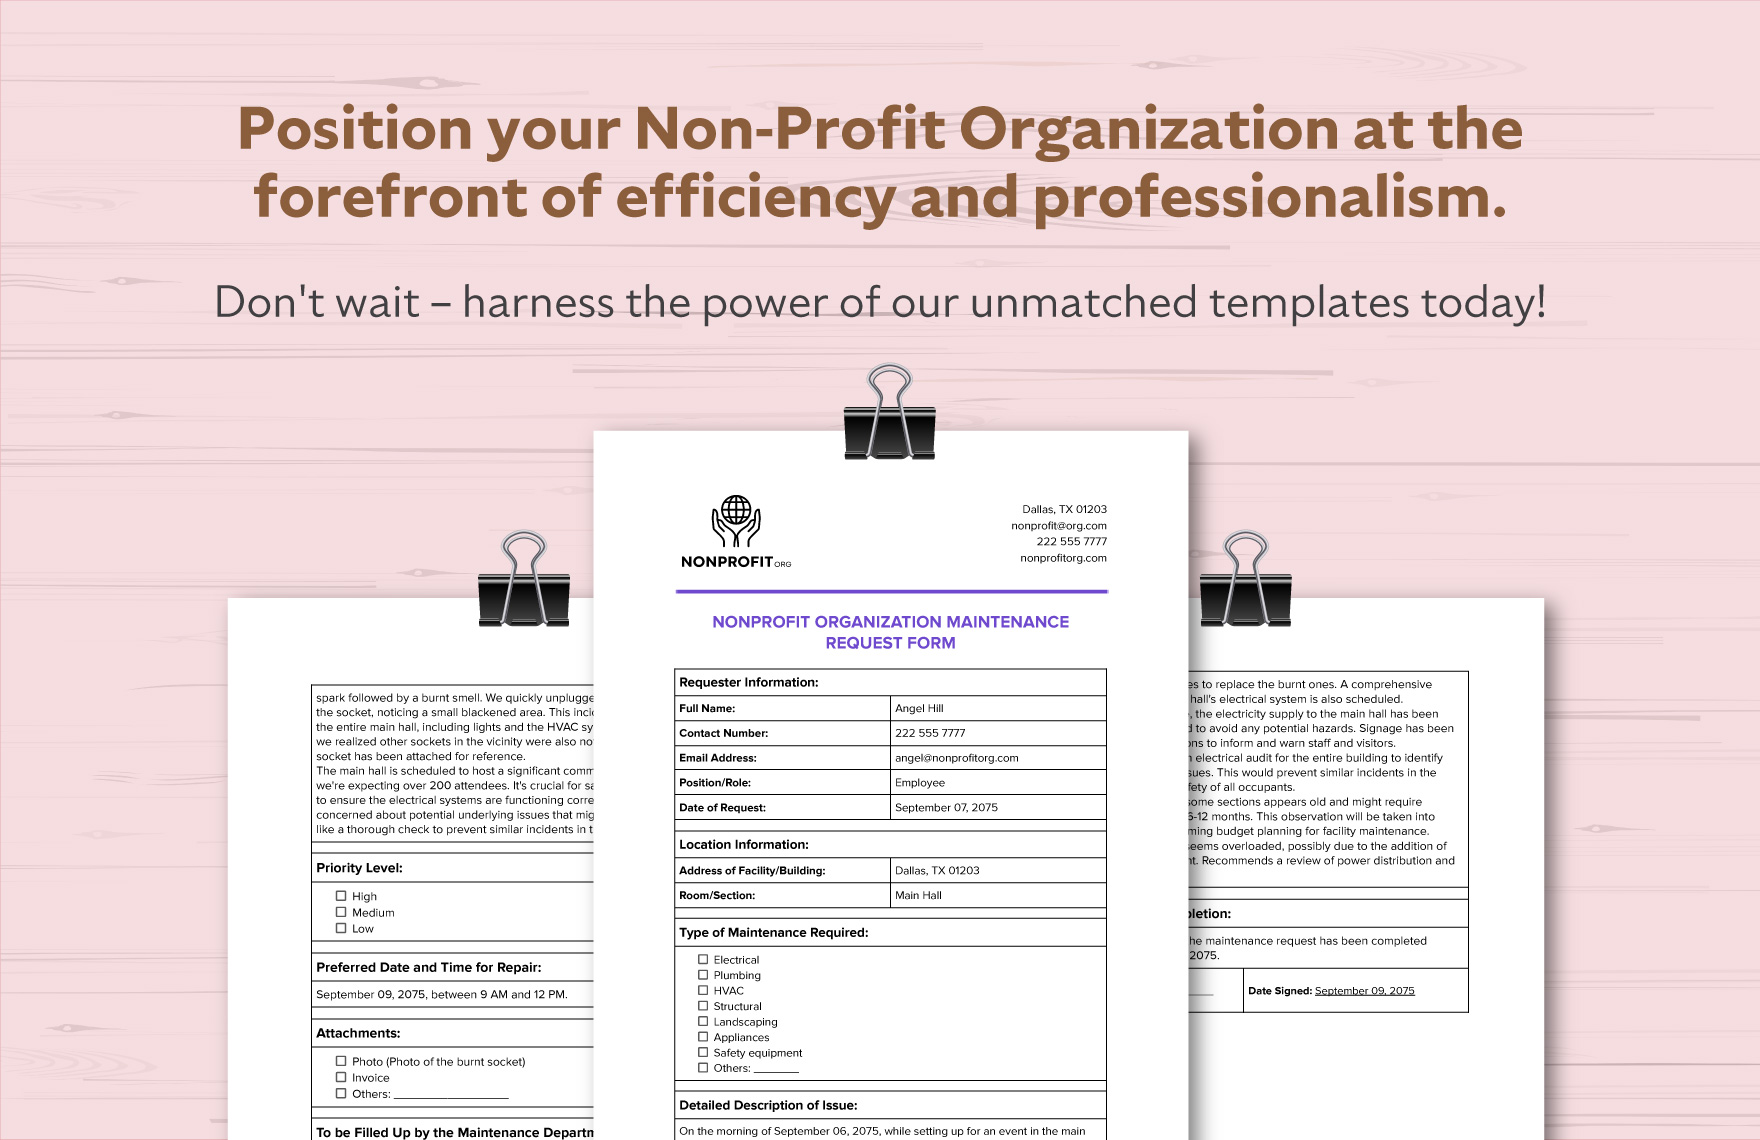 Nonprofit Organization Maintenance Request Form Template